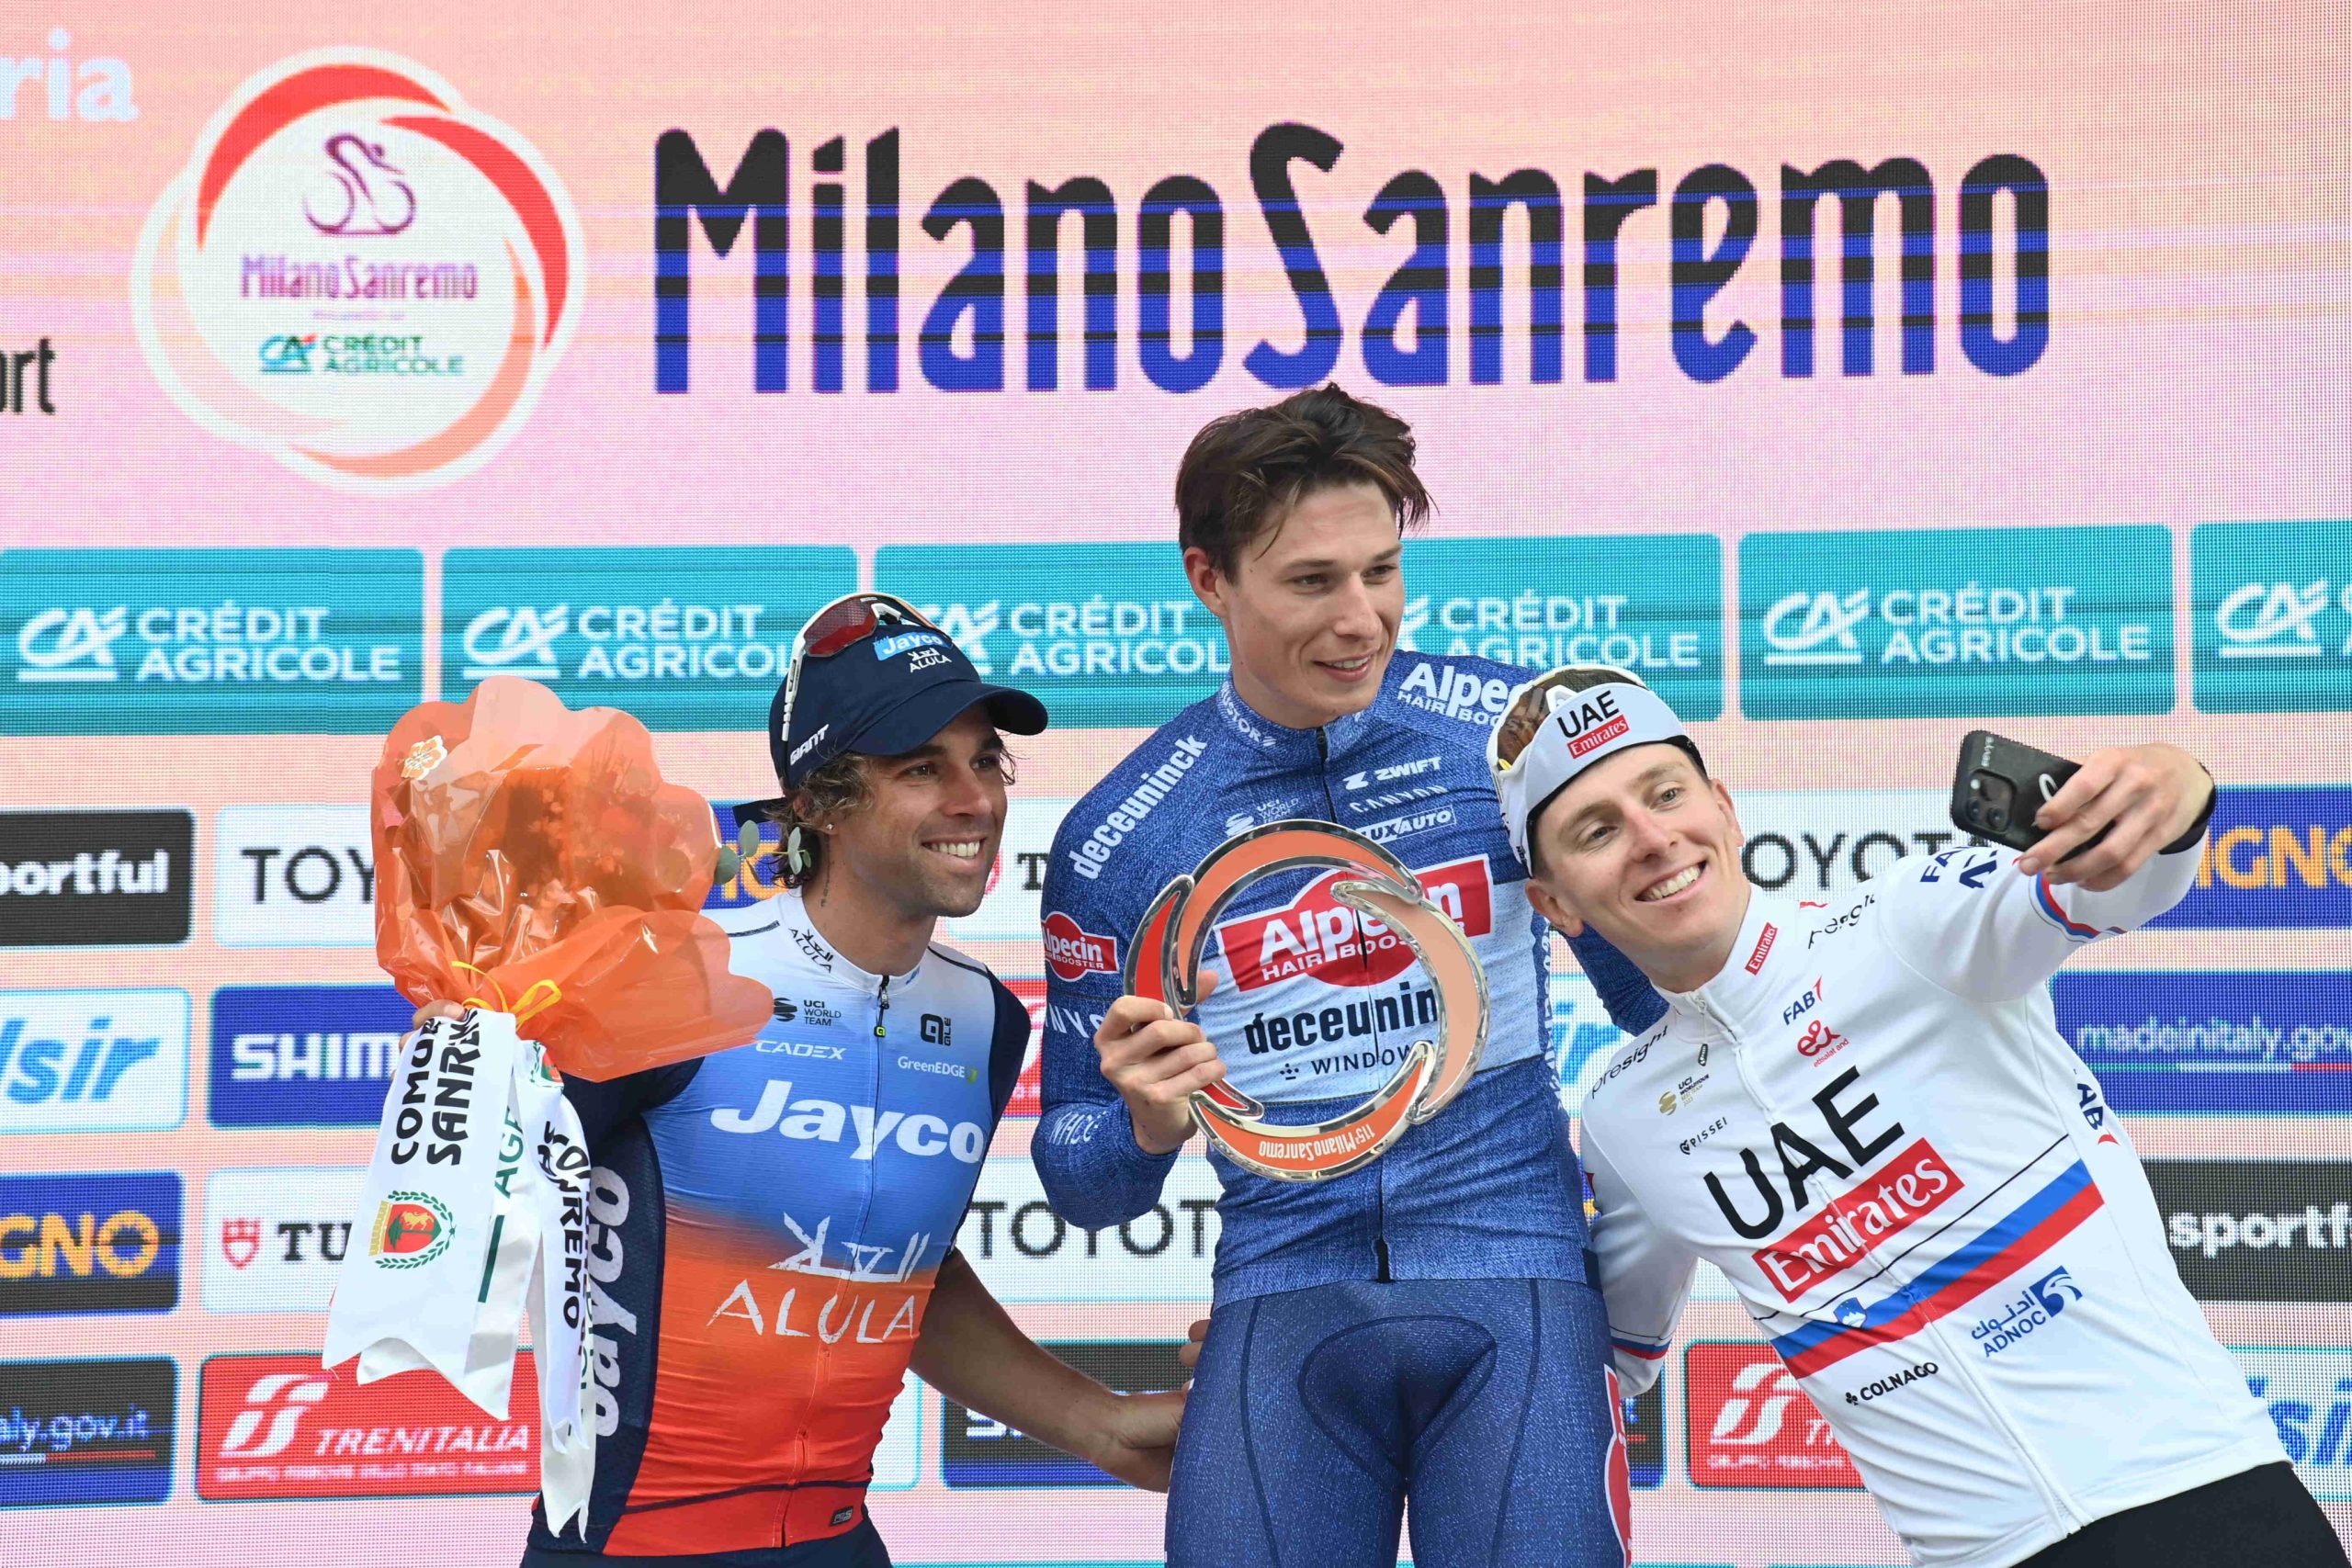 Pódio da Milano Sanremo com Michael Matthews, Jasper Philipsen e Tadej Pogacar (Foto: Milano Sanremo) 